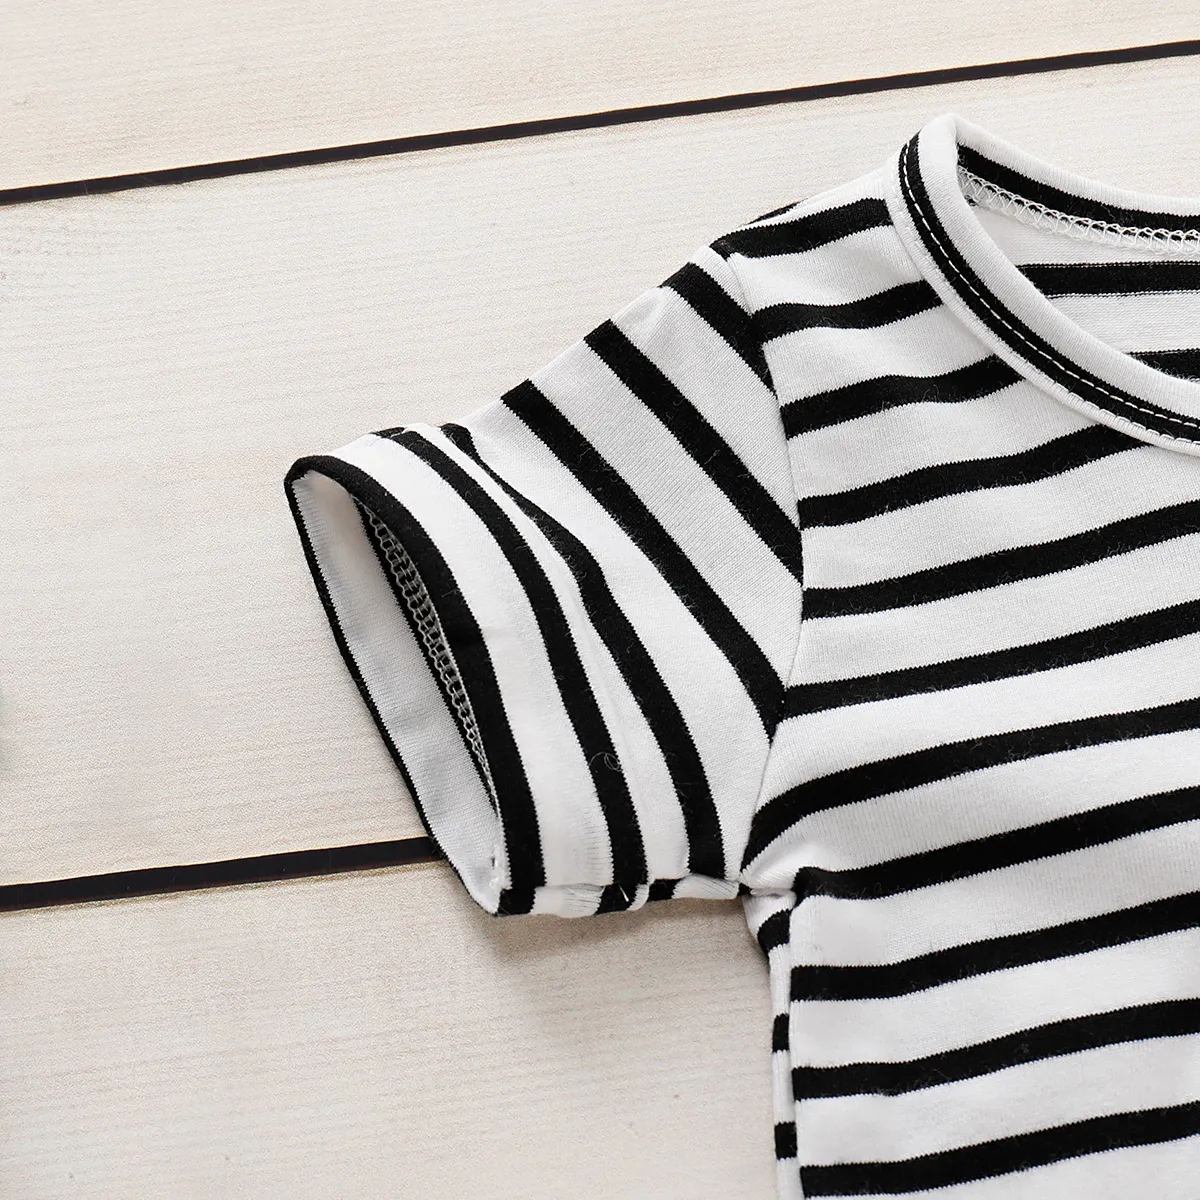 100% Cotton Striped Short-sleeve Baby Romper Black/White big image 1